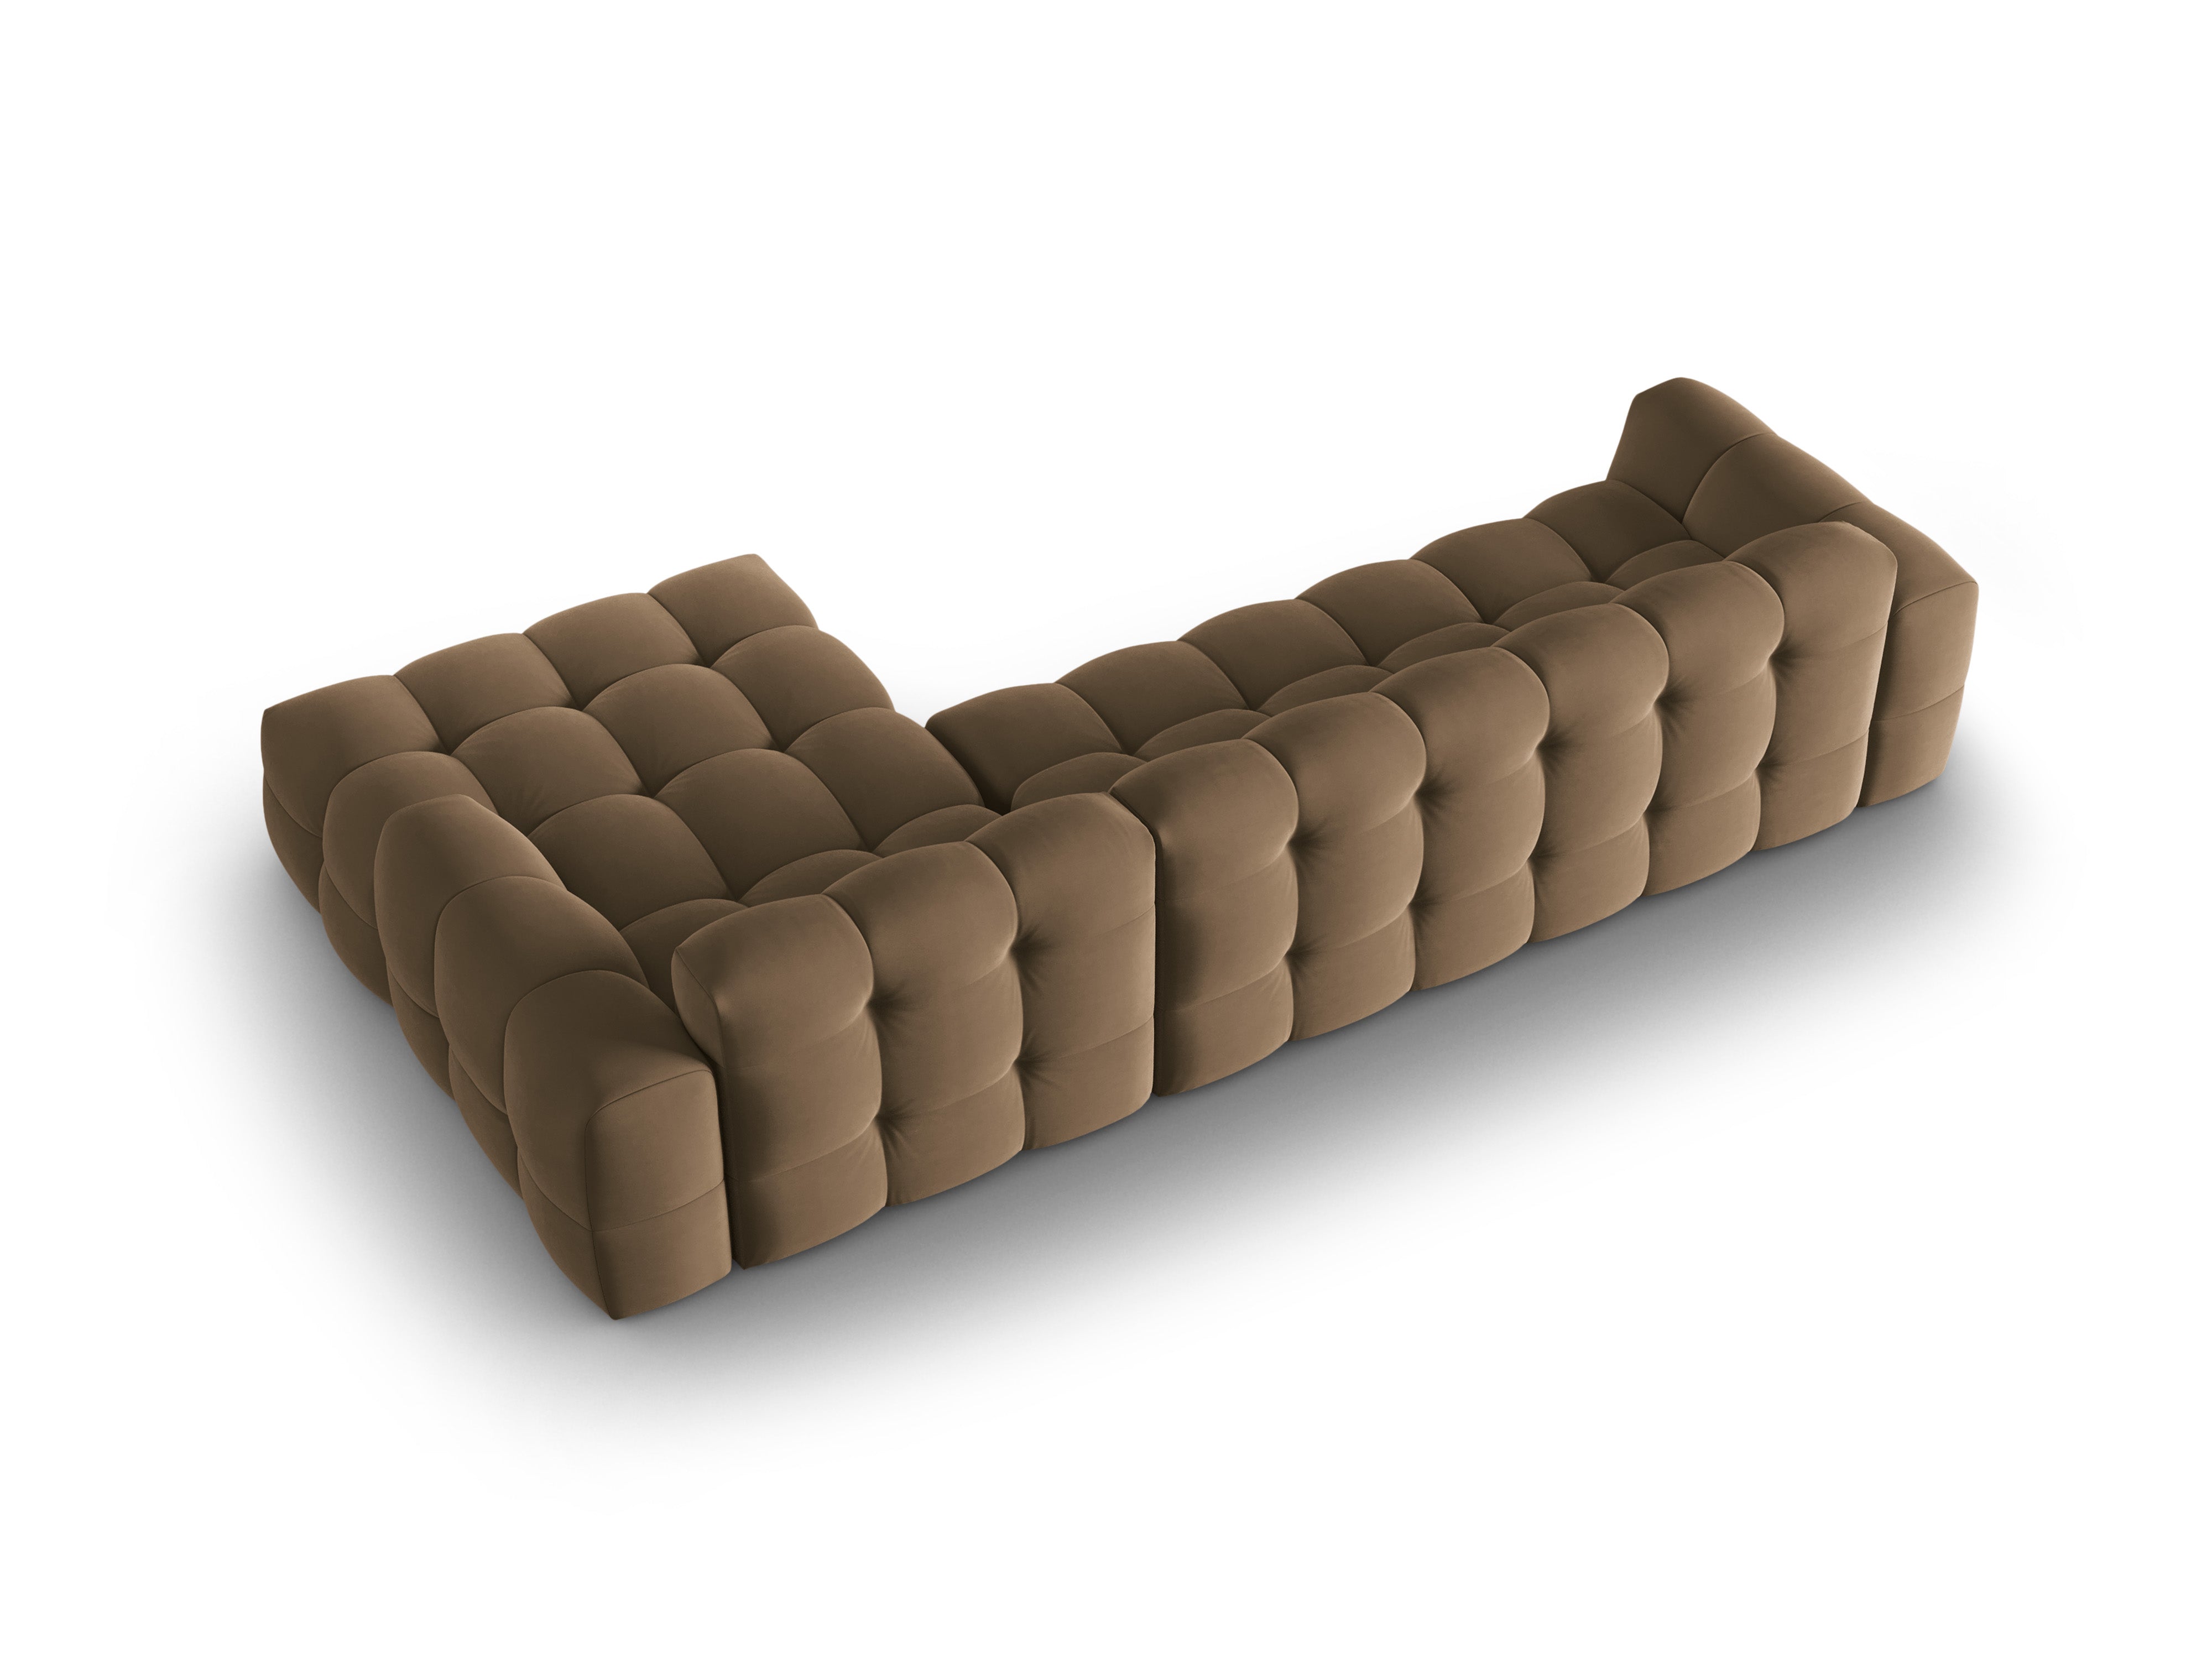 Velvet Right Corner Sofa, "Nino", 4 Seats, 320x170x68
Made in Europe, Maison Heritage, Eye on Design